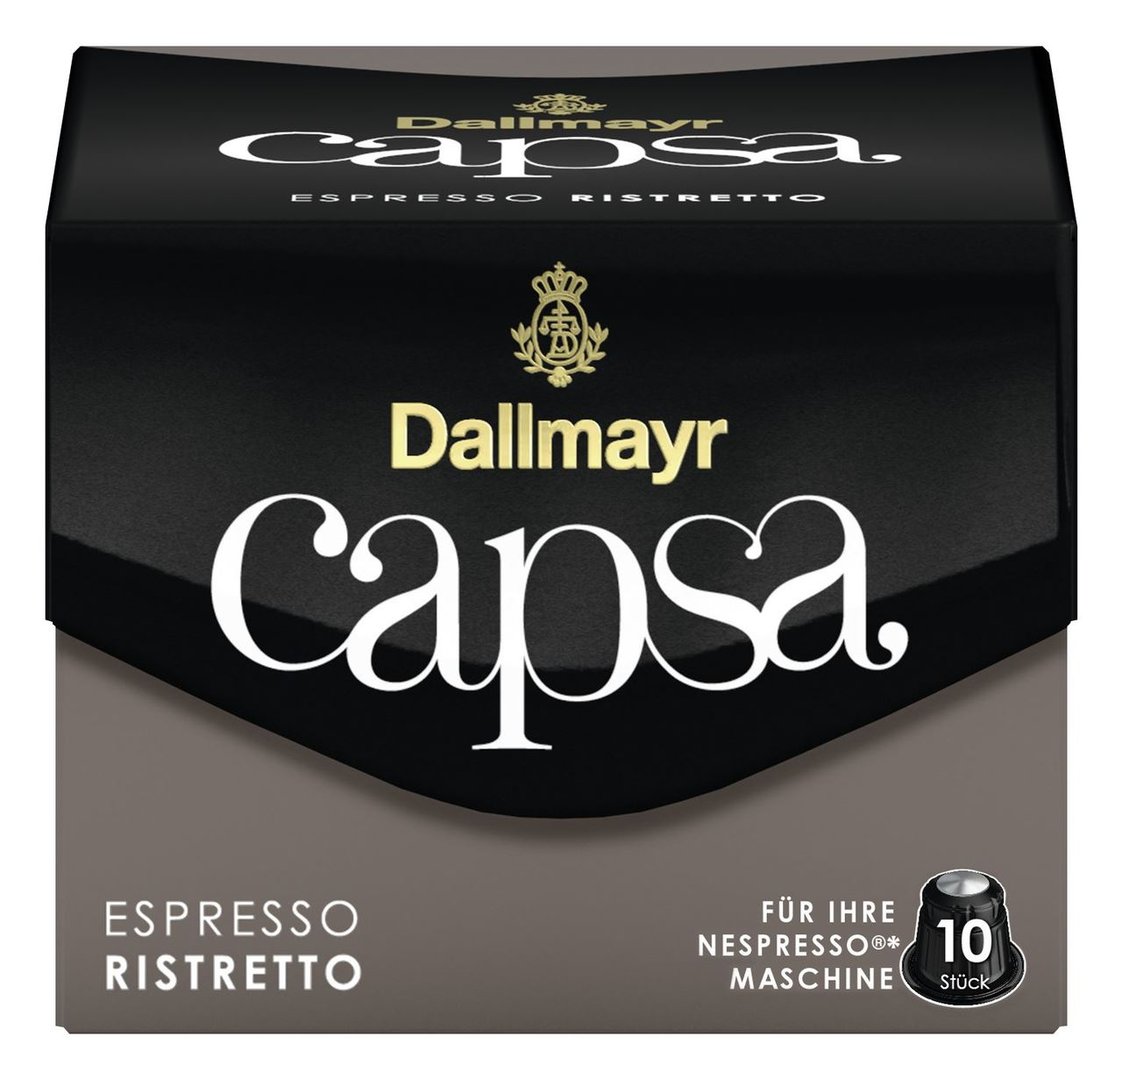 Dallmayr - Capsa Espresso Ristretto 10 Kapseln - 56 g Packung